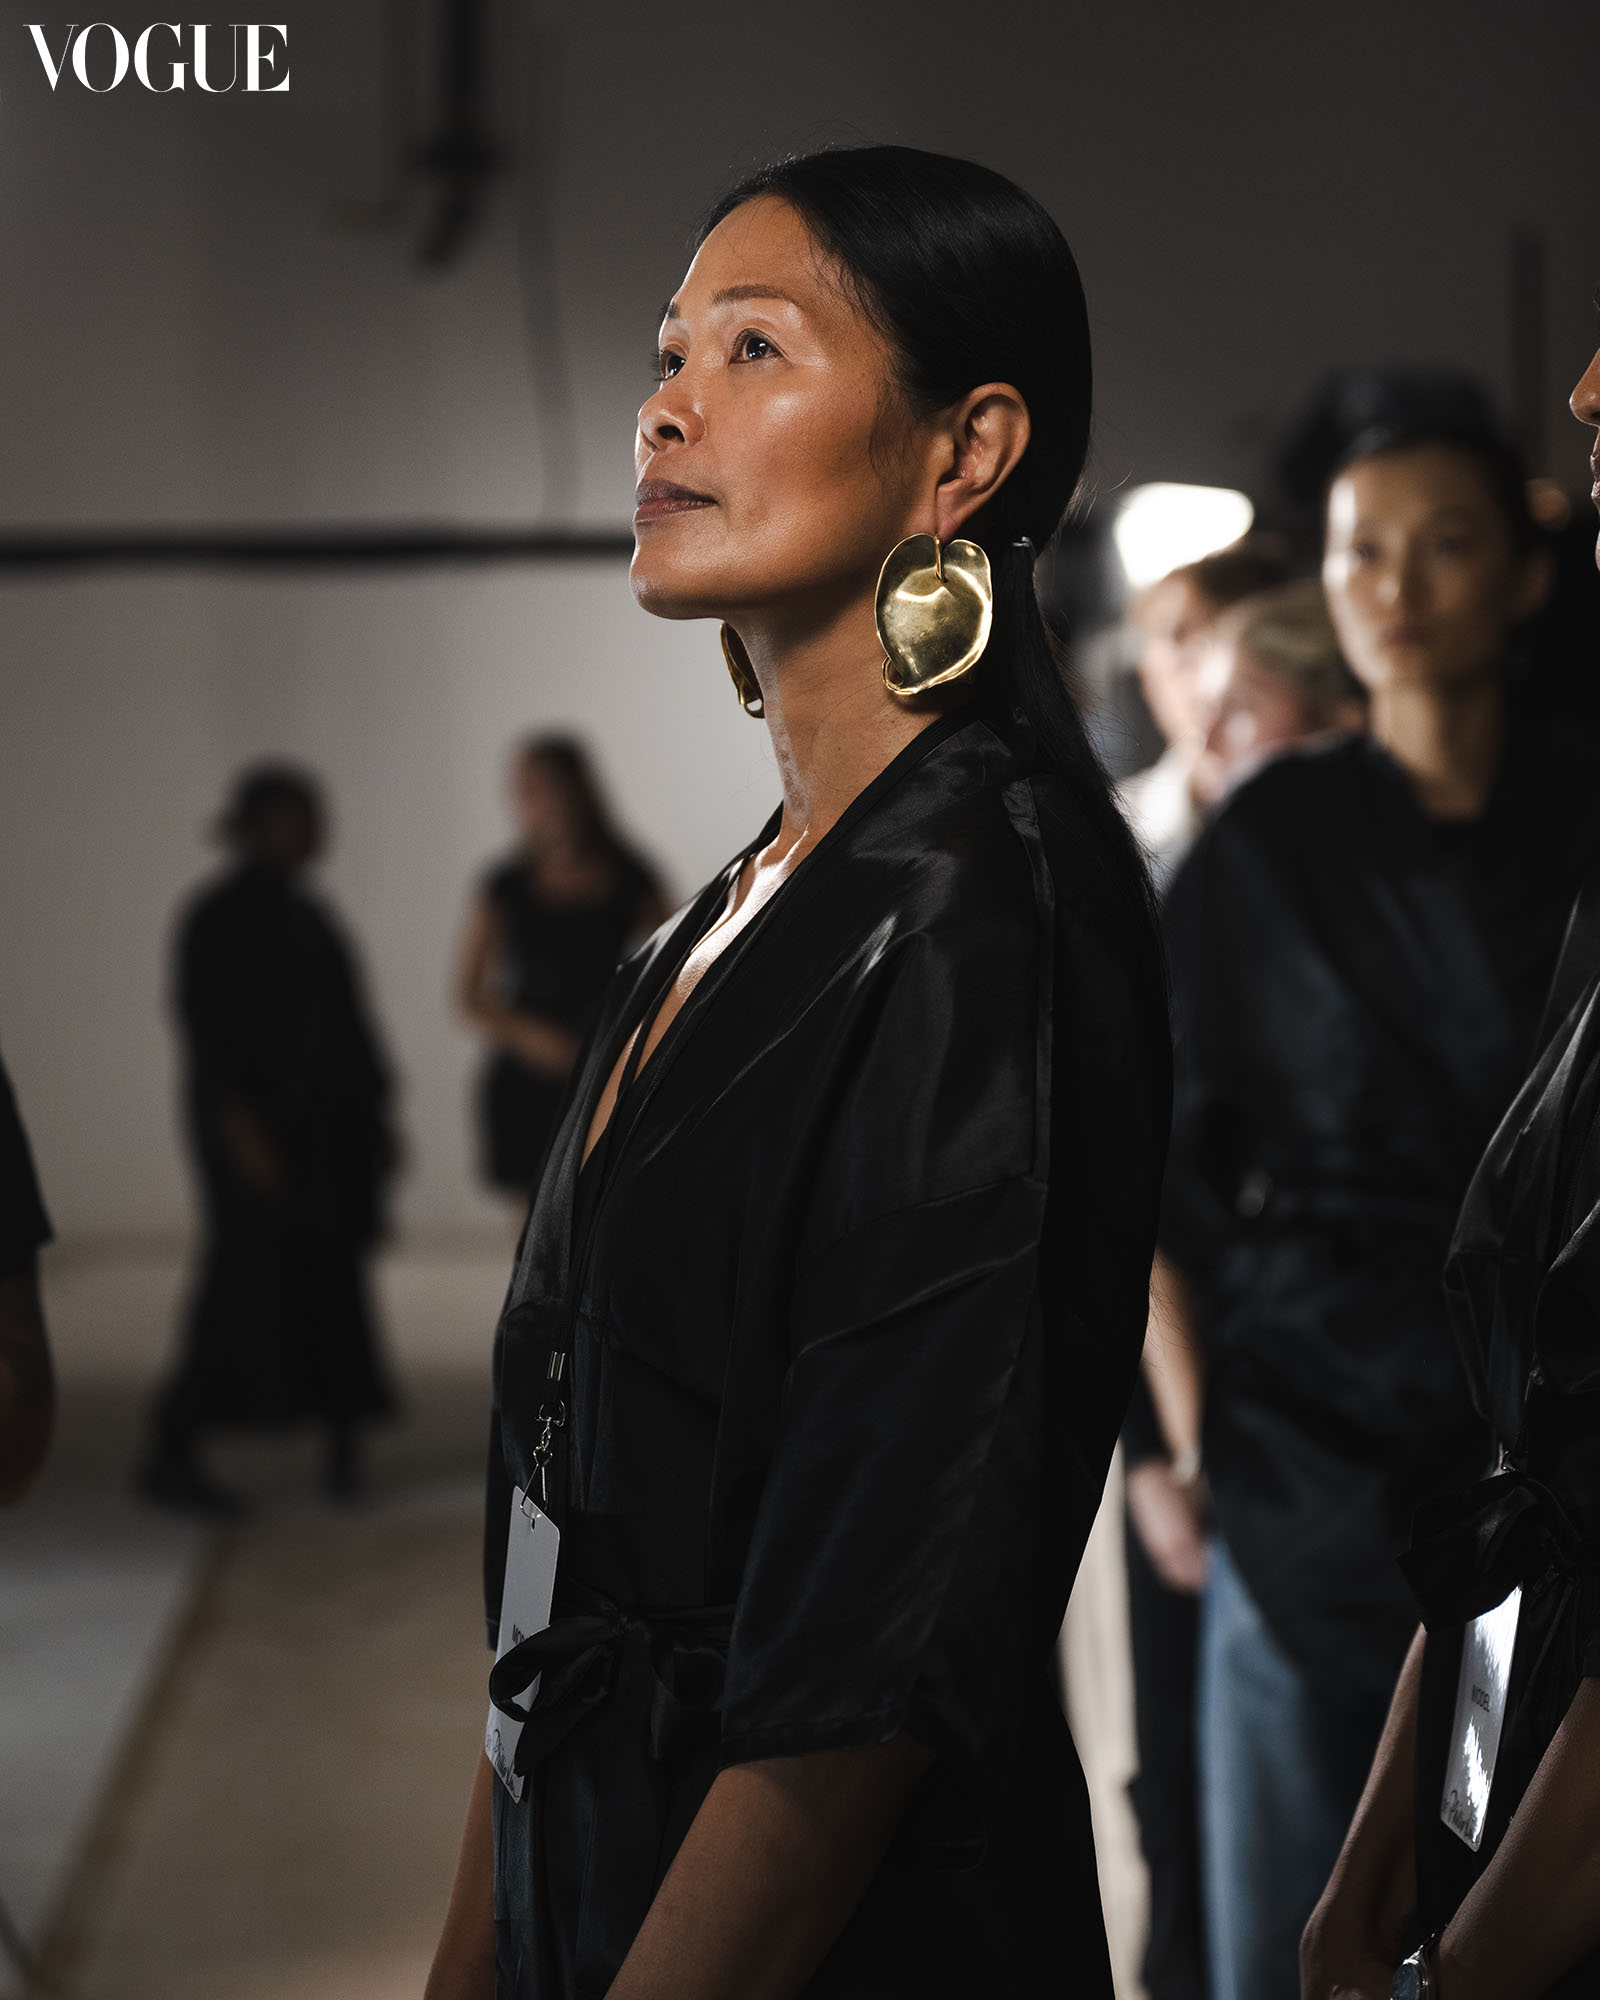 Eleanor Simon models for Philip Lim at New York Fashion Week